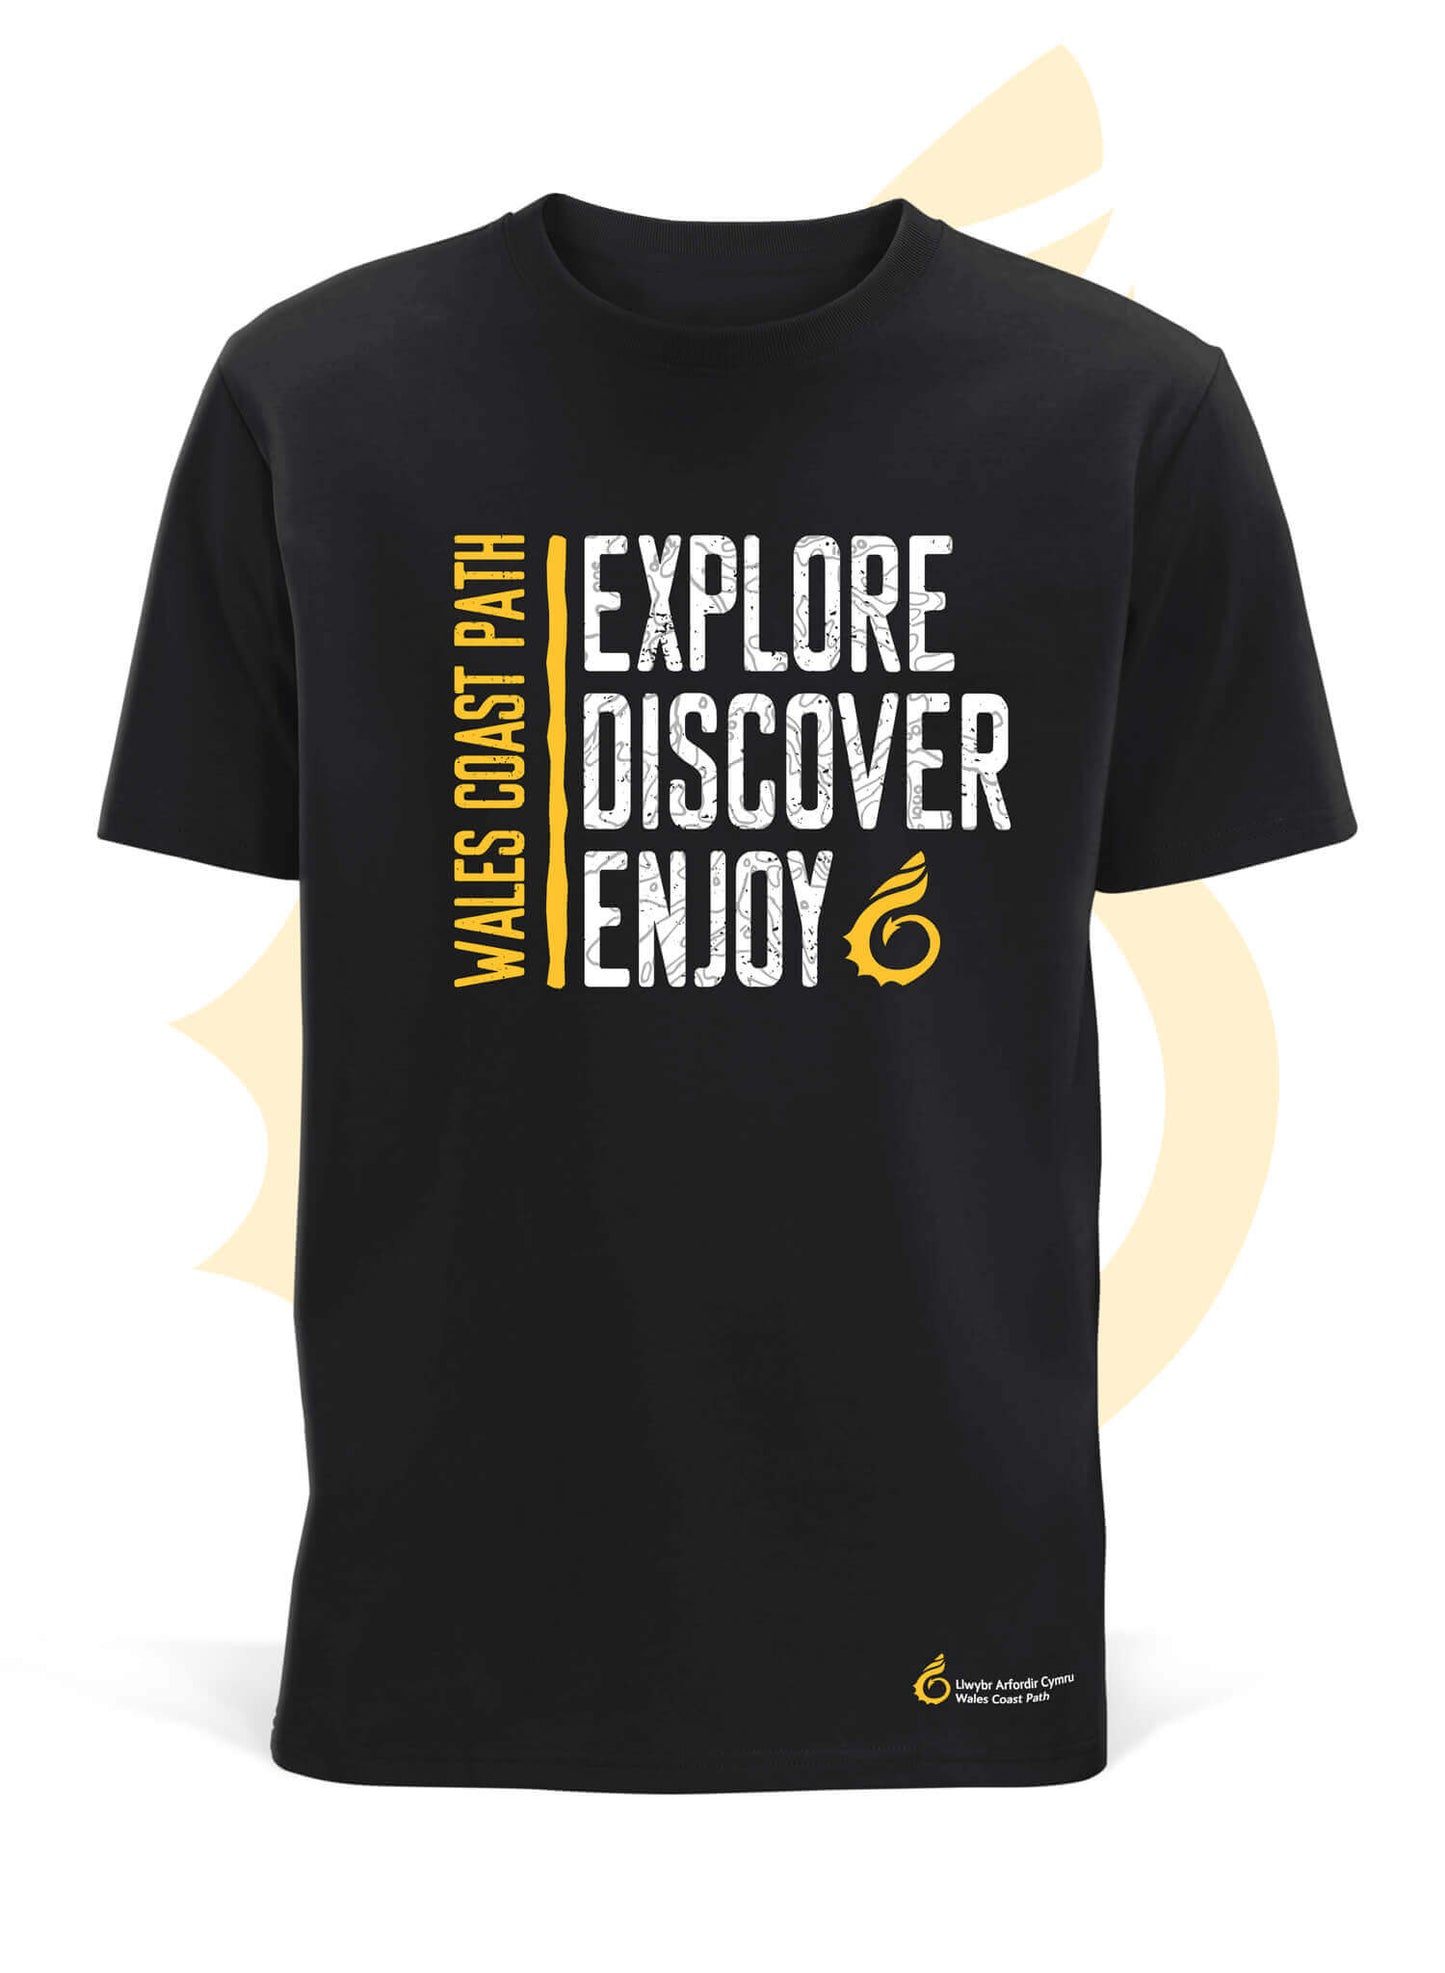 Black Explore Discover Enjoy t-shirt